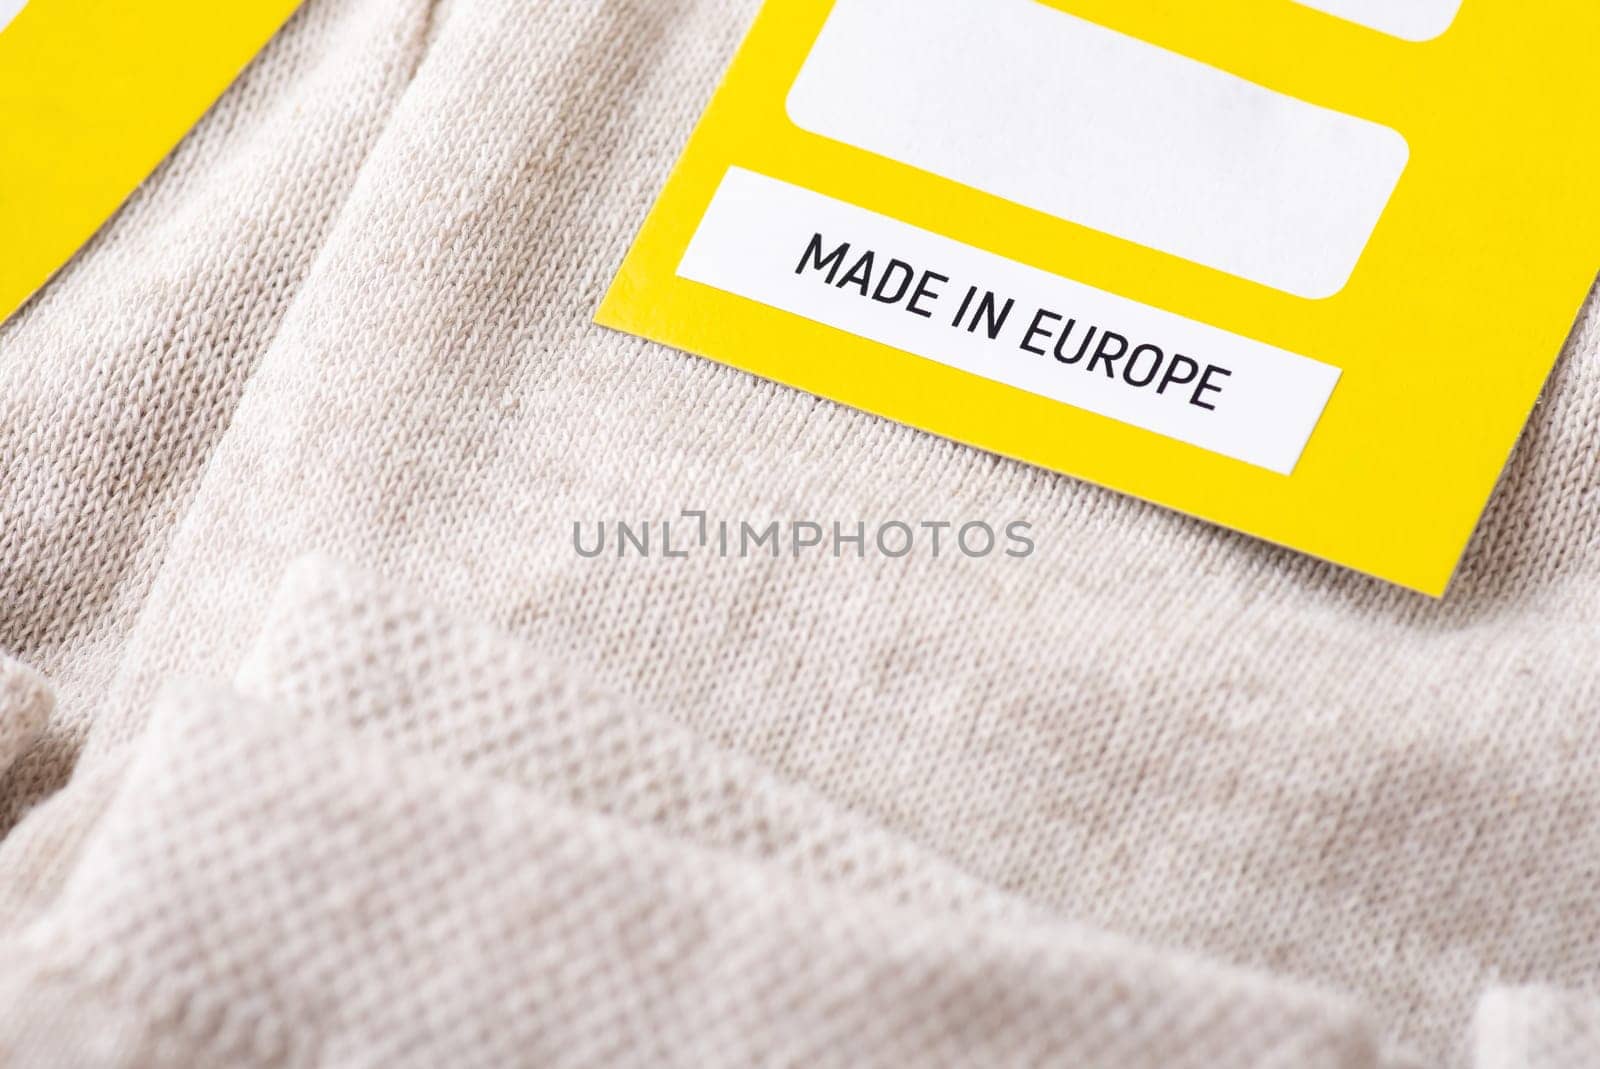 Made in Europe inscription on label of socks by VitaliiPetrushenko